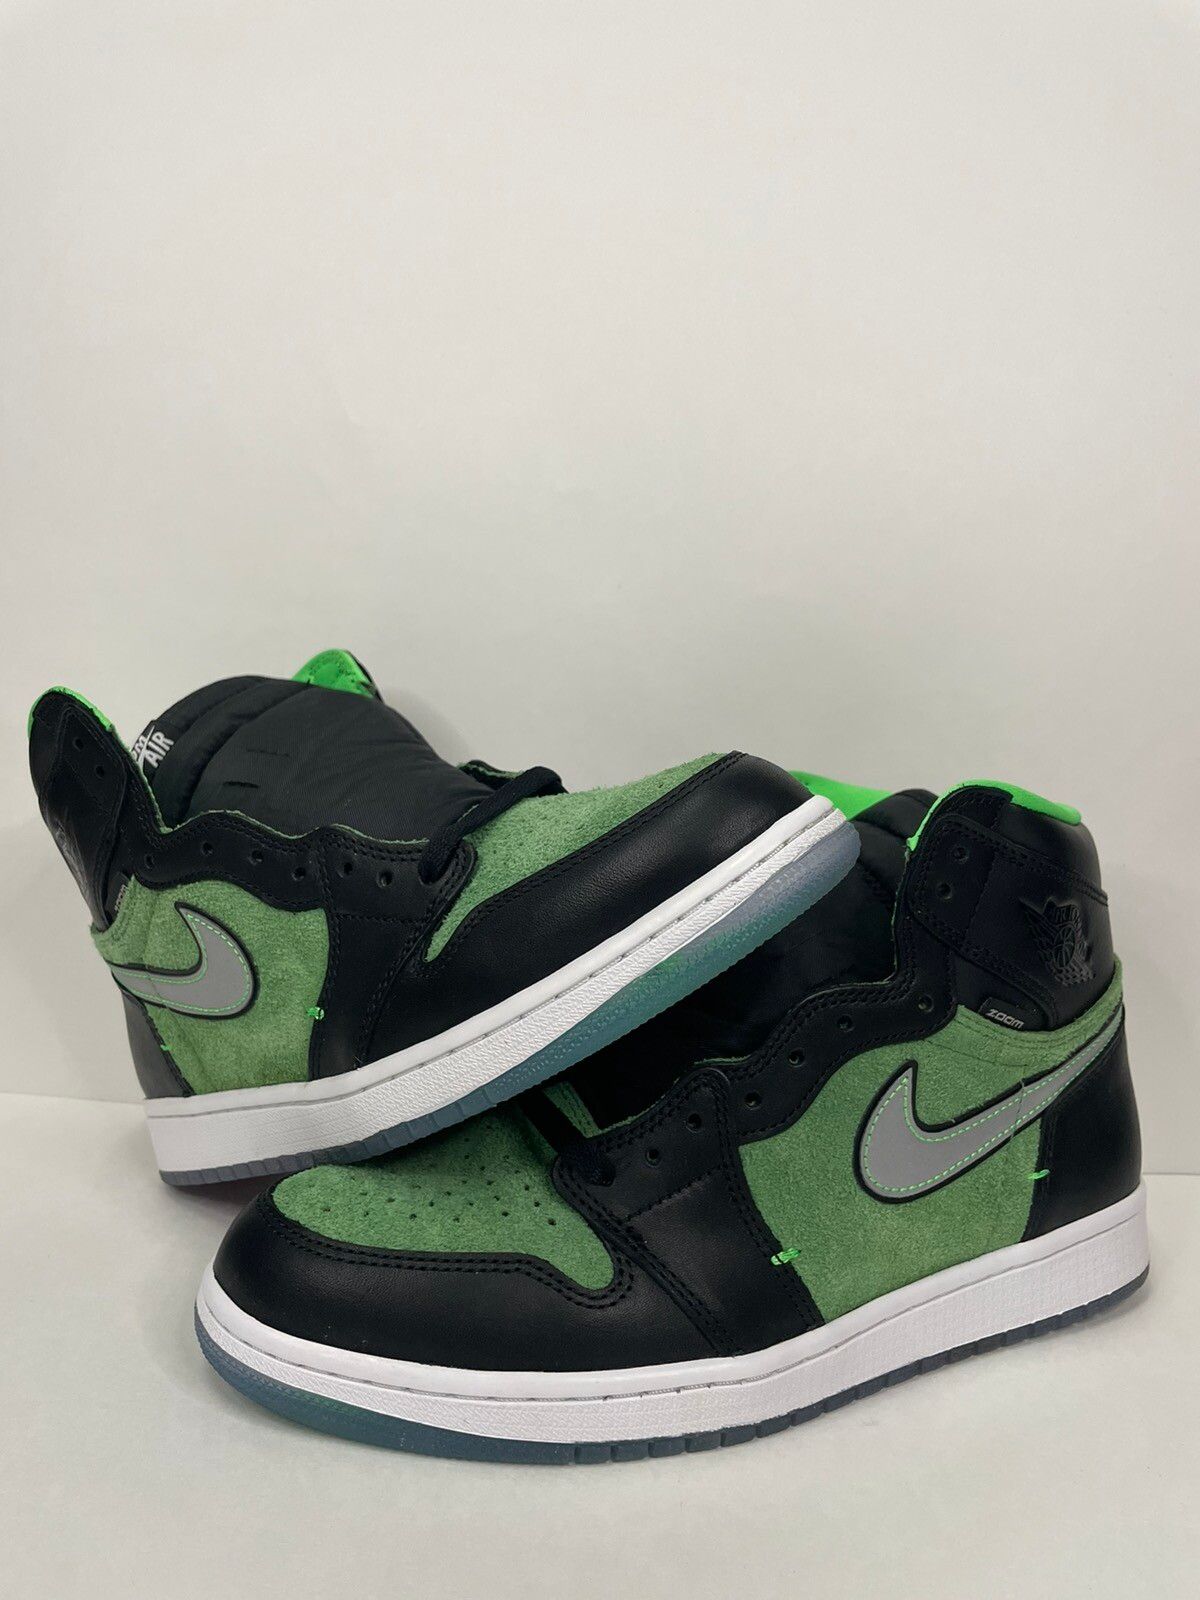 Pre-owned Jordan Brand 1 Zen Green Shoes